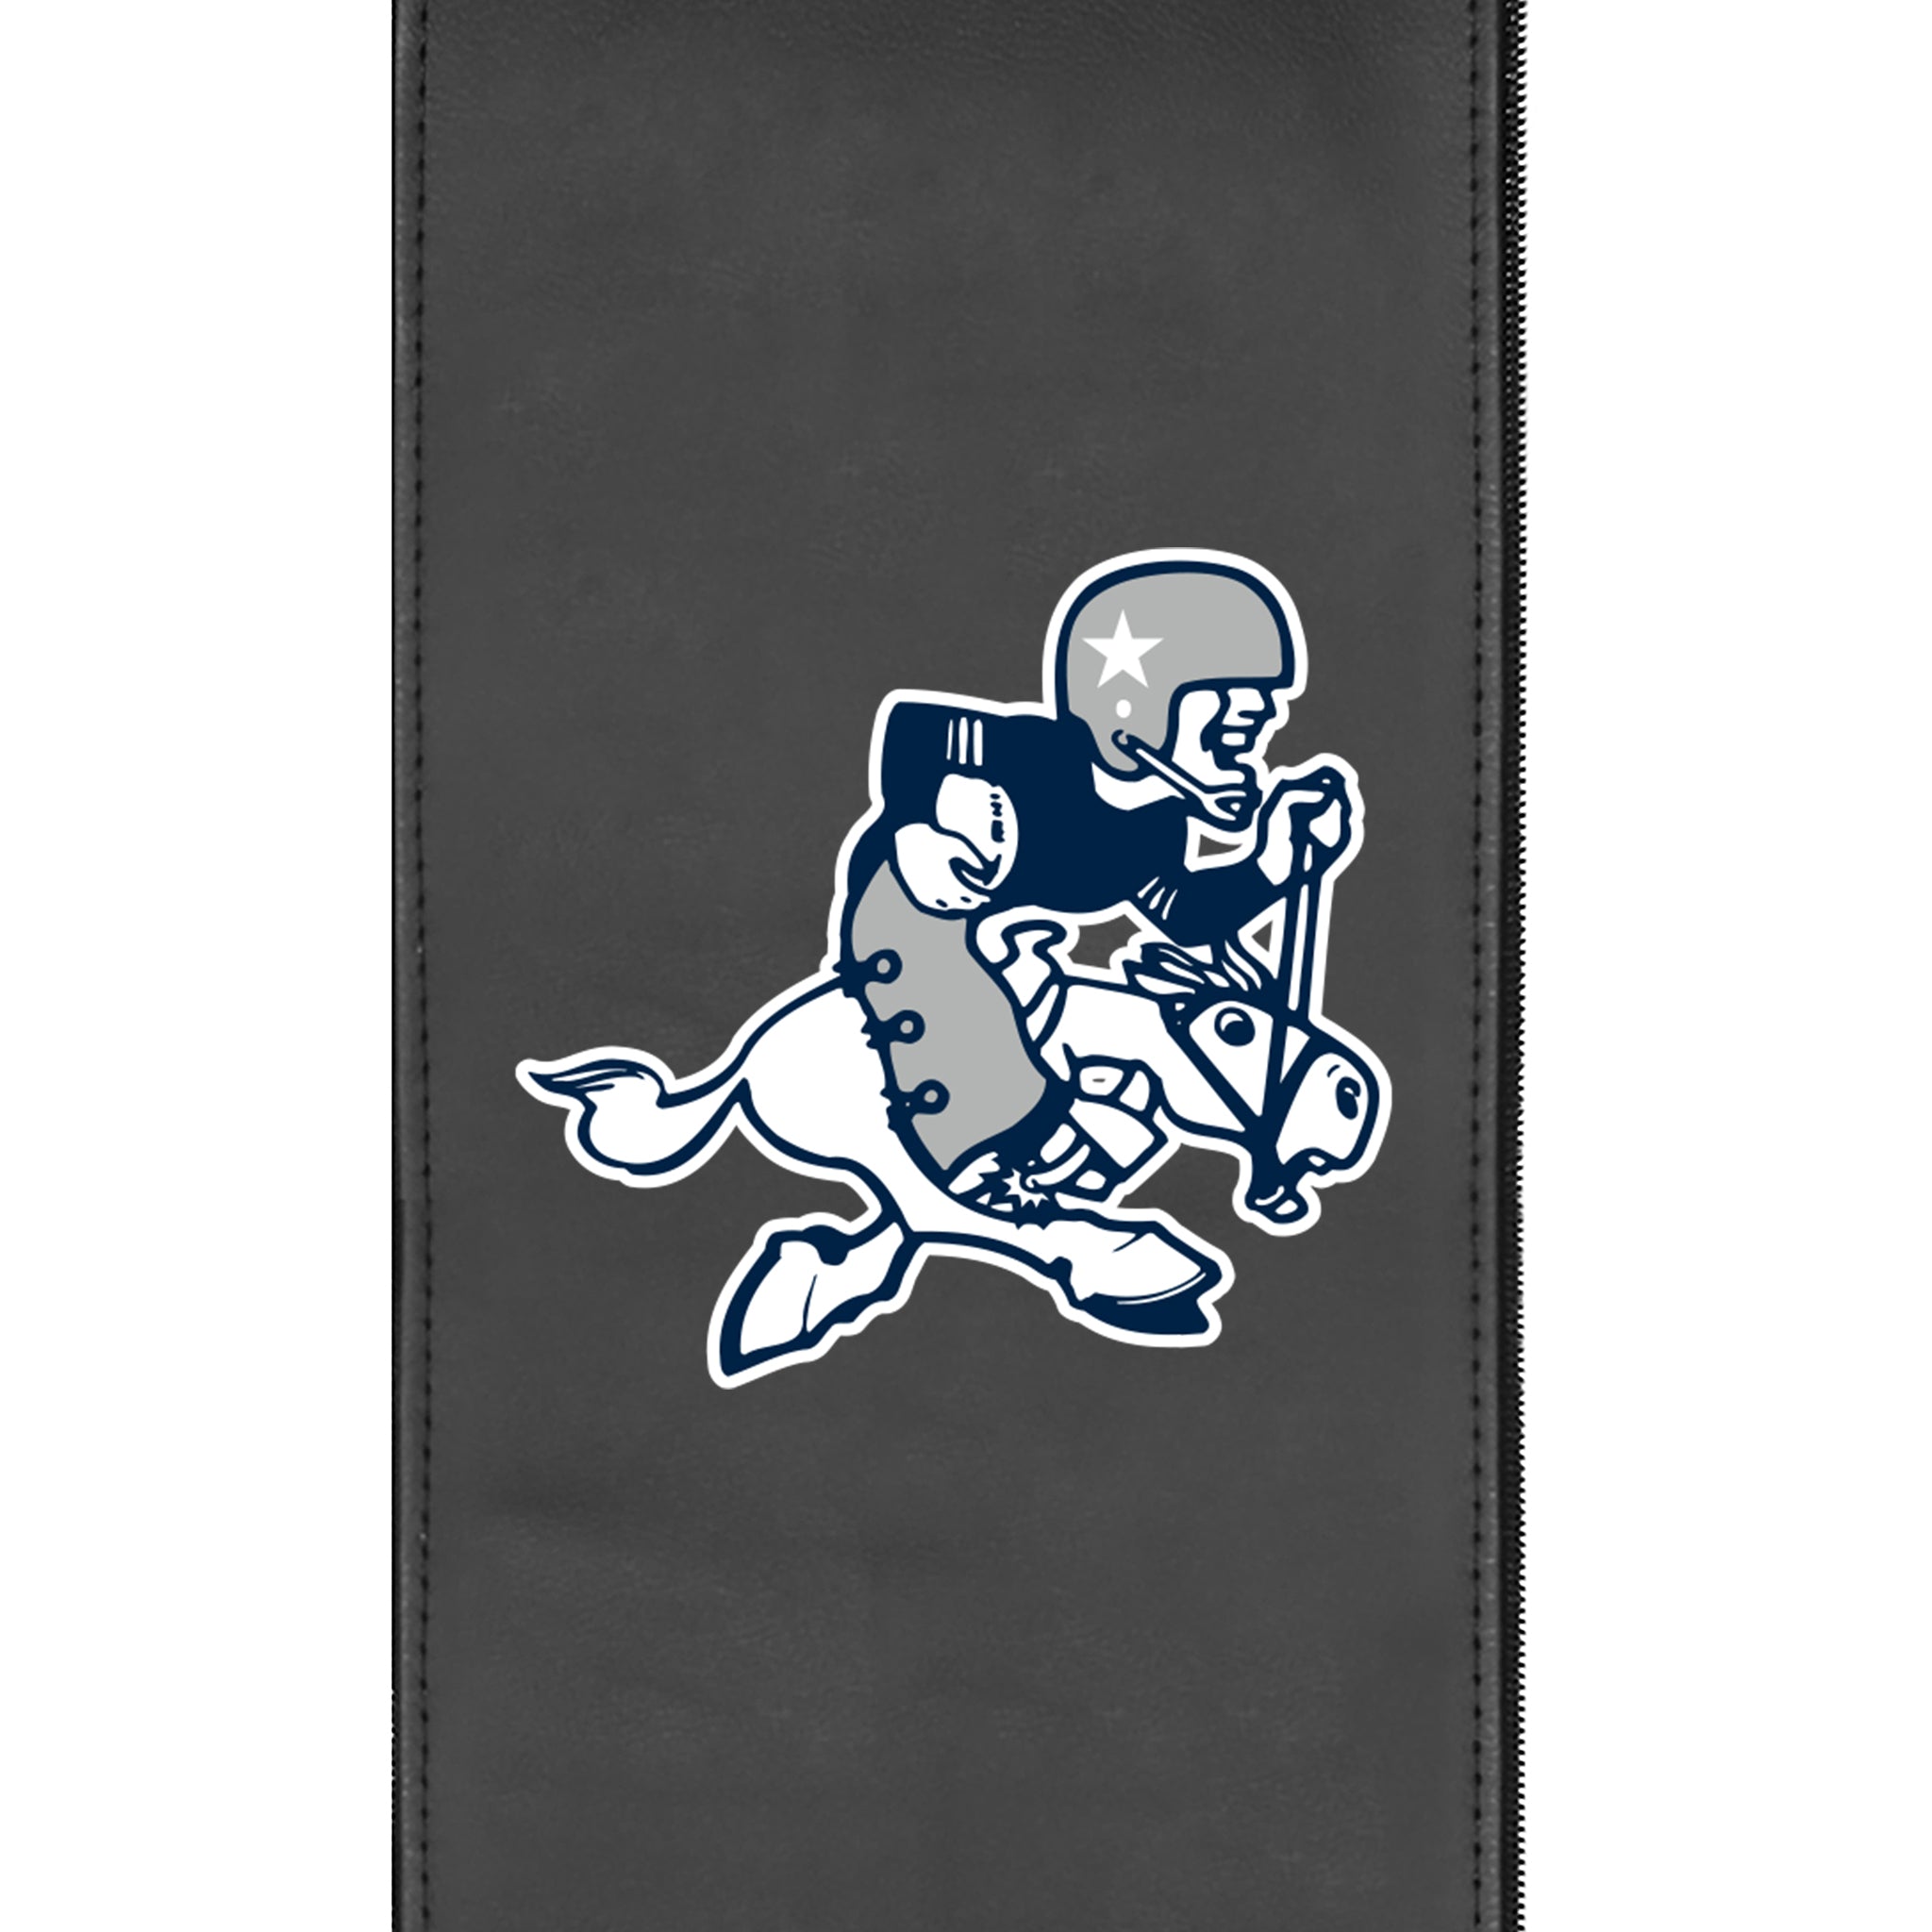 Silver Club Chair with Dallas Cowboys Classic Logo